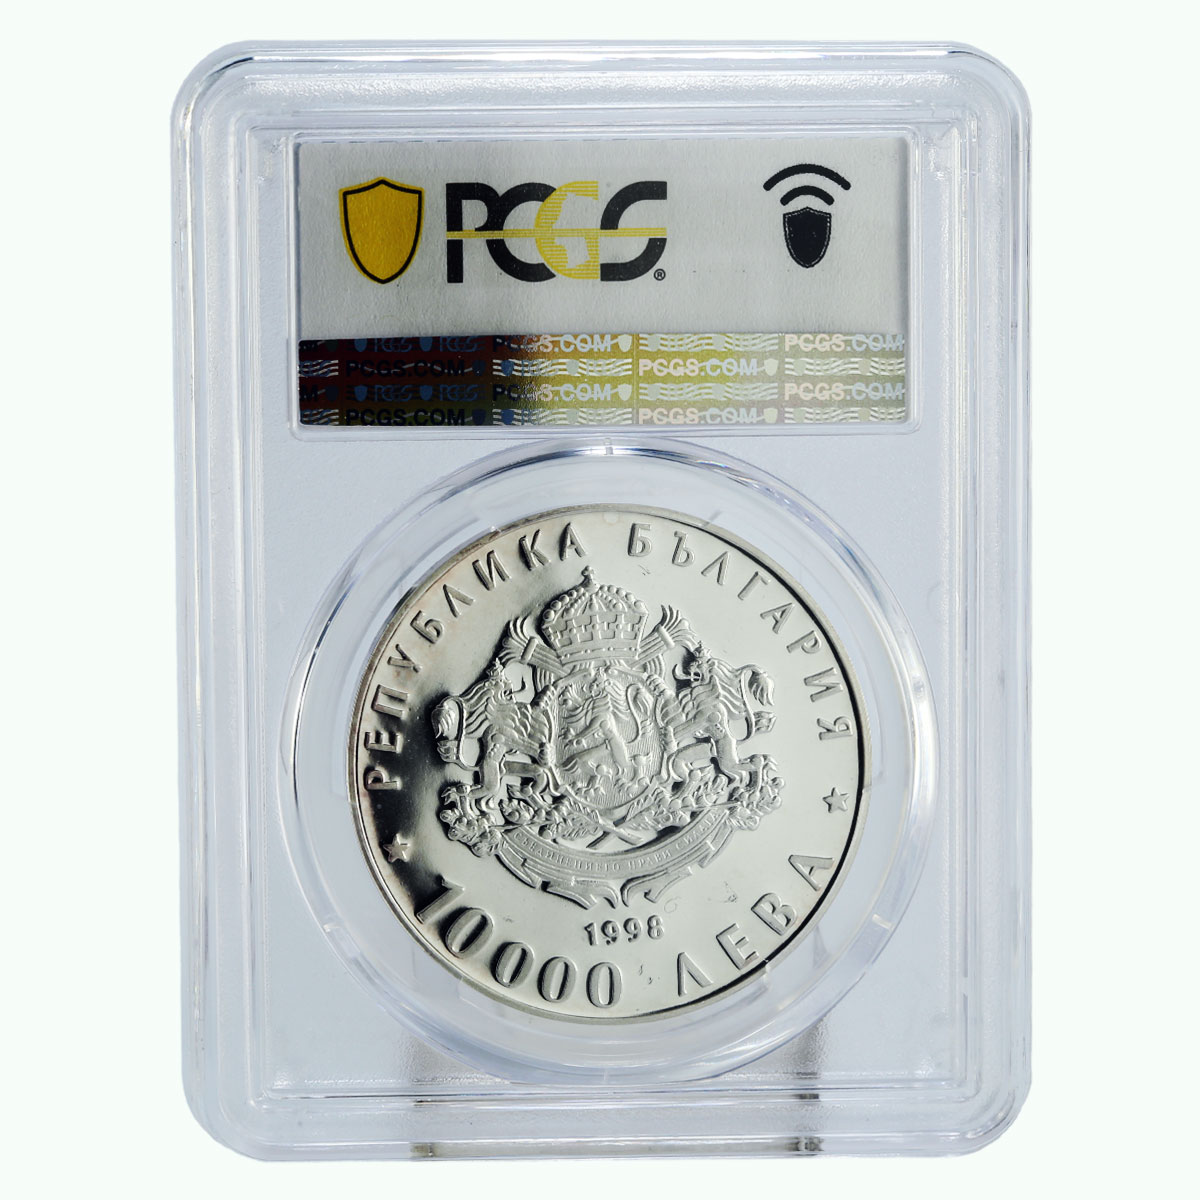 Bulgaria 10000 leva 120 Years of Liberation PR66 PCGS silver coin 1998